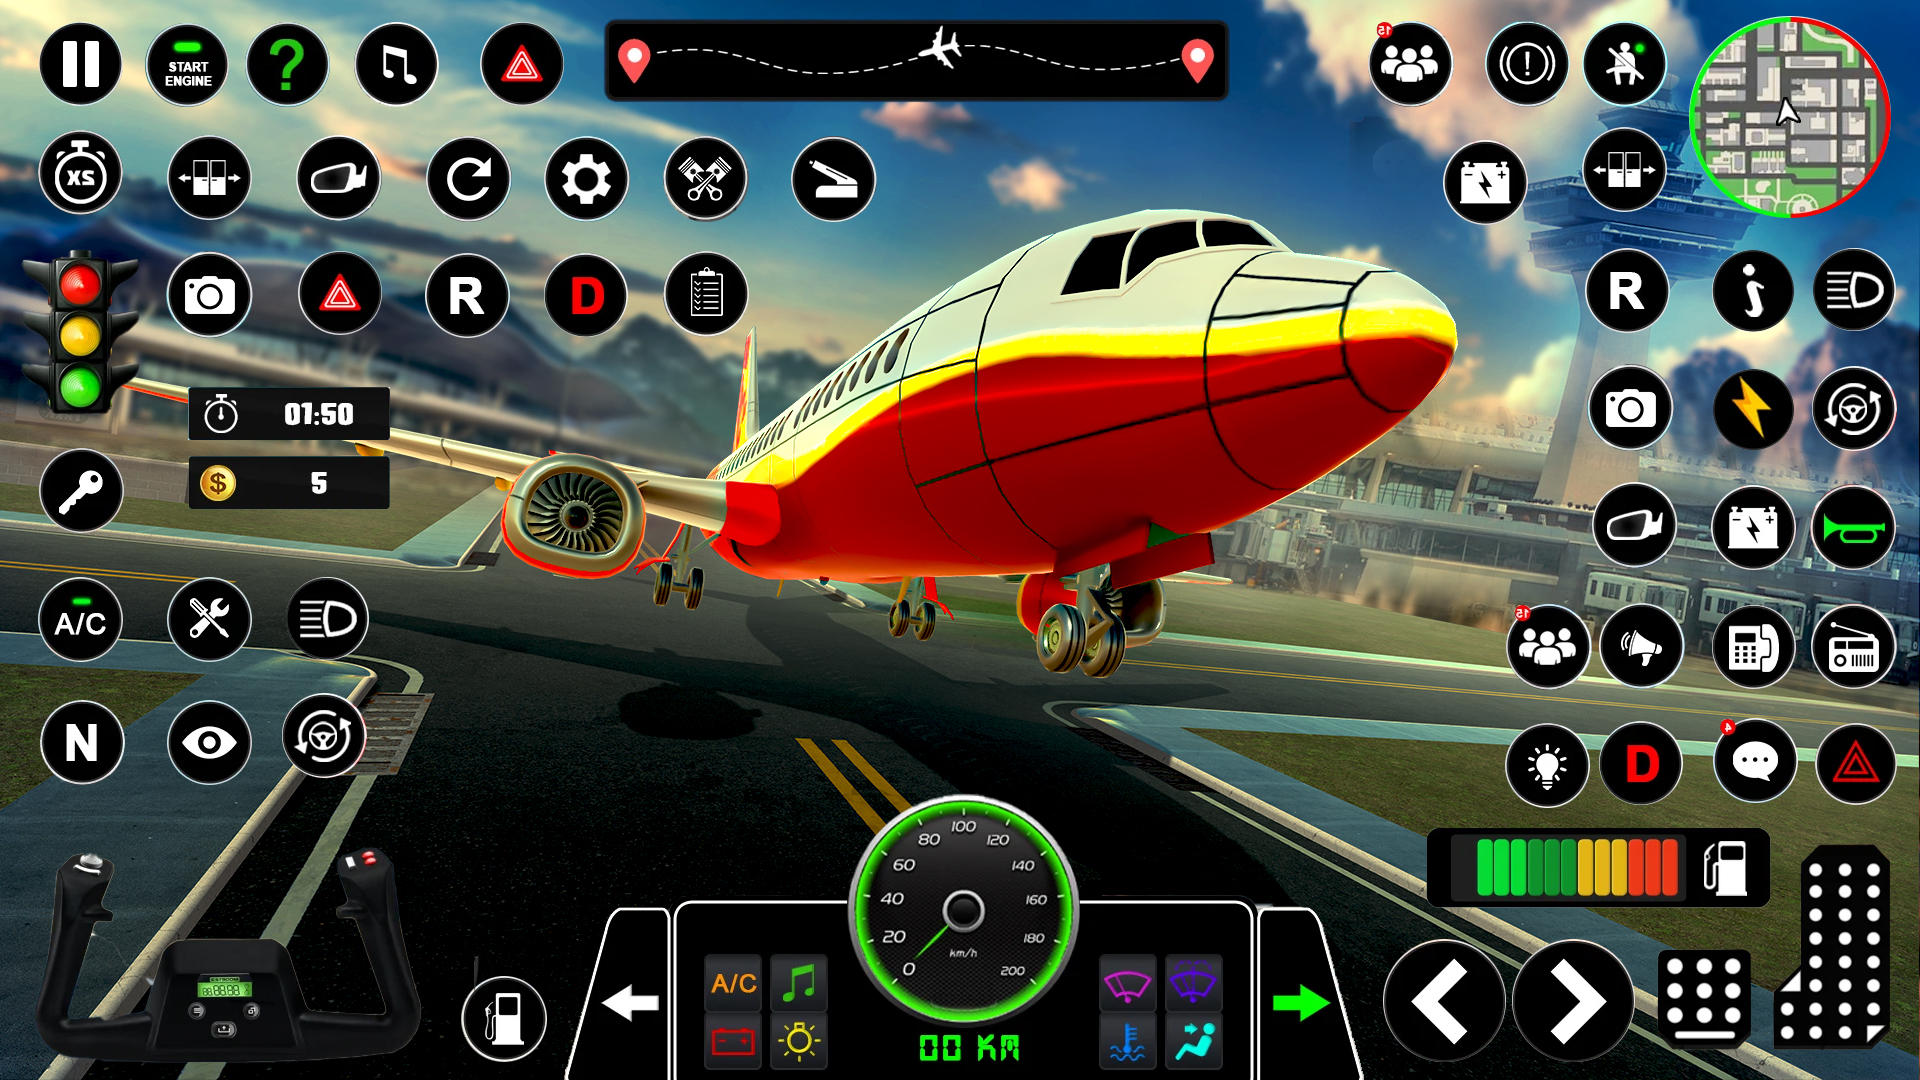 Flight Simulator Online - Android/iOS Gameplay 